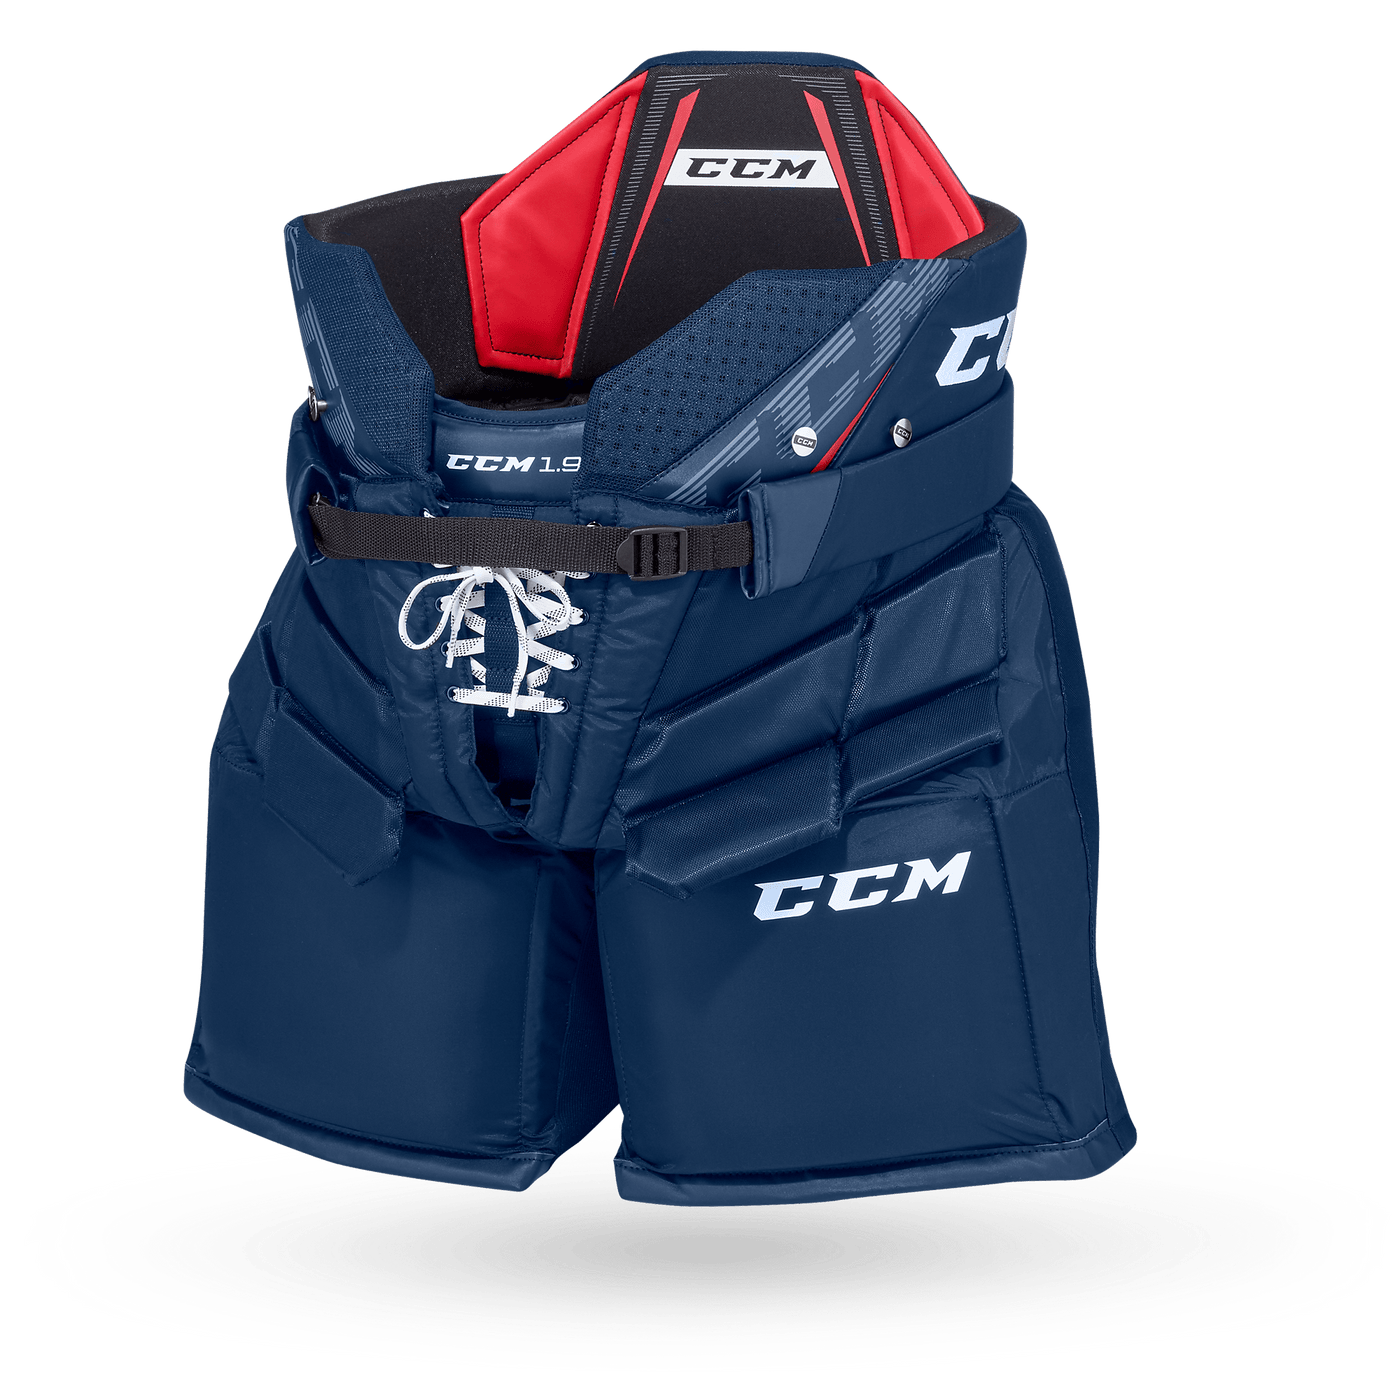 CCM 1.9 Intermediate Goalie Pants - The Hockey Shop Source For Sports